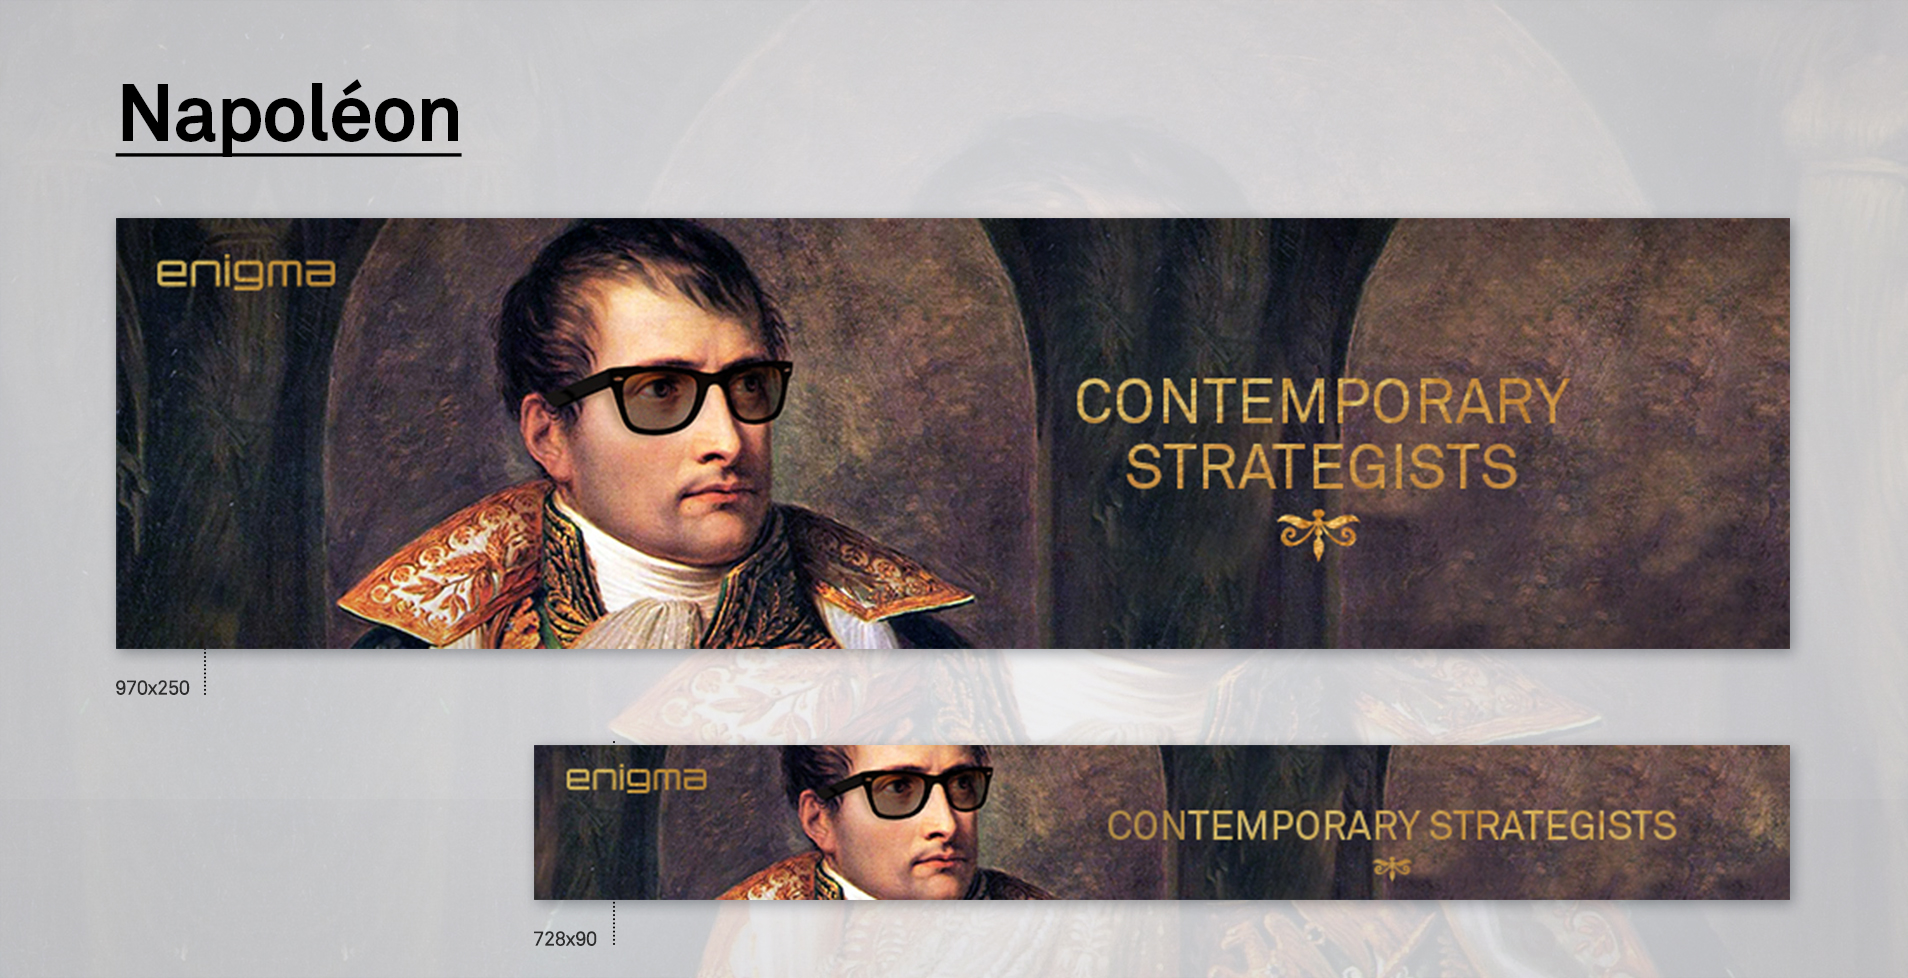 Online banner on Napoleon